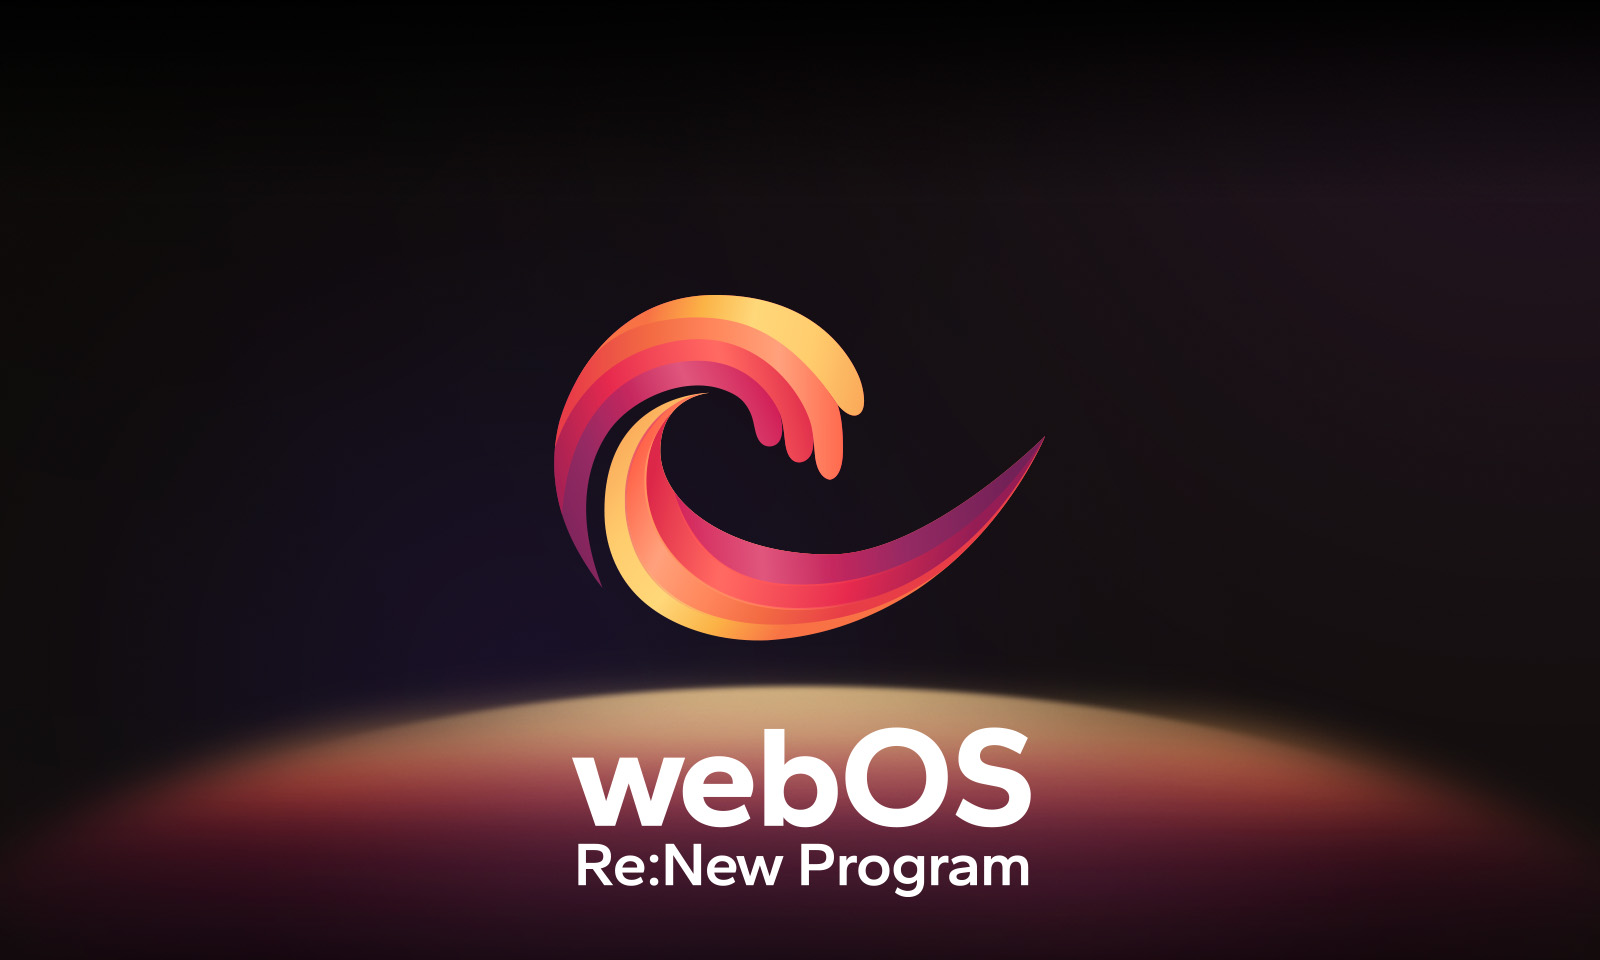 webOS logo lebdi u sredini na crnoj pozadini, dok je prostor ispod njega osvetljen crvenim, narandžastim i žutim bojama logoa. Ispod logoa su reči „webOS Re:New Program”.